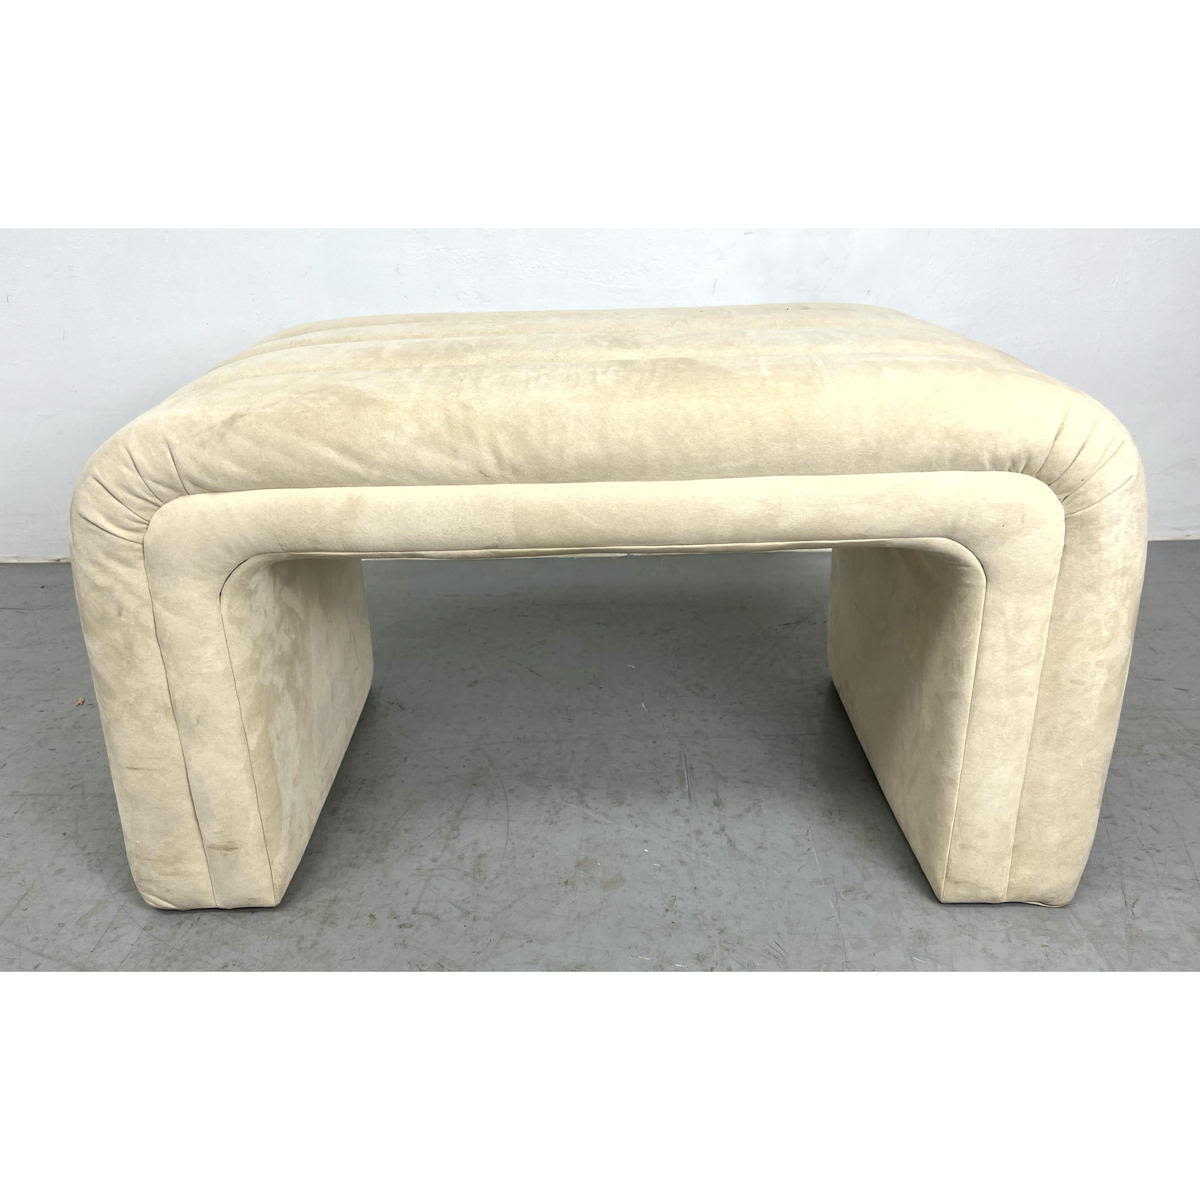 Channel Upholstered Modern Bench